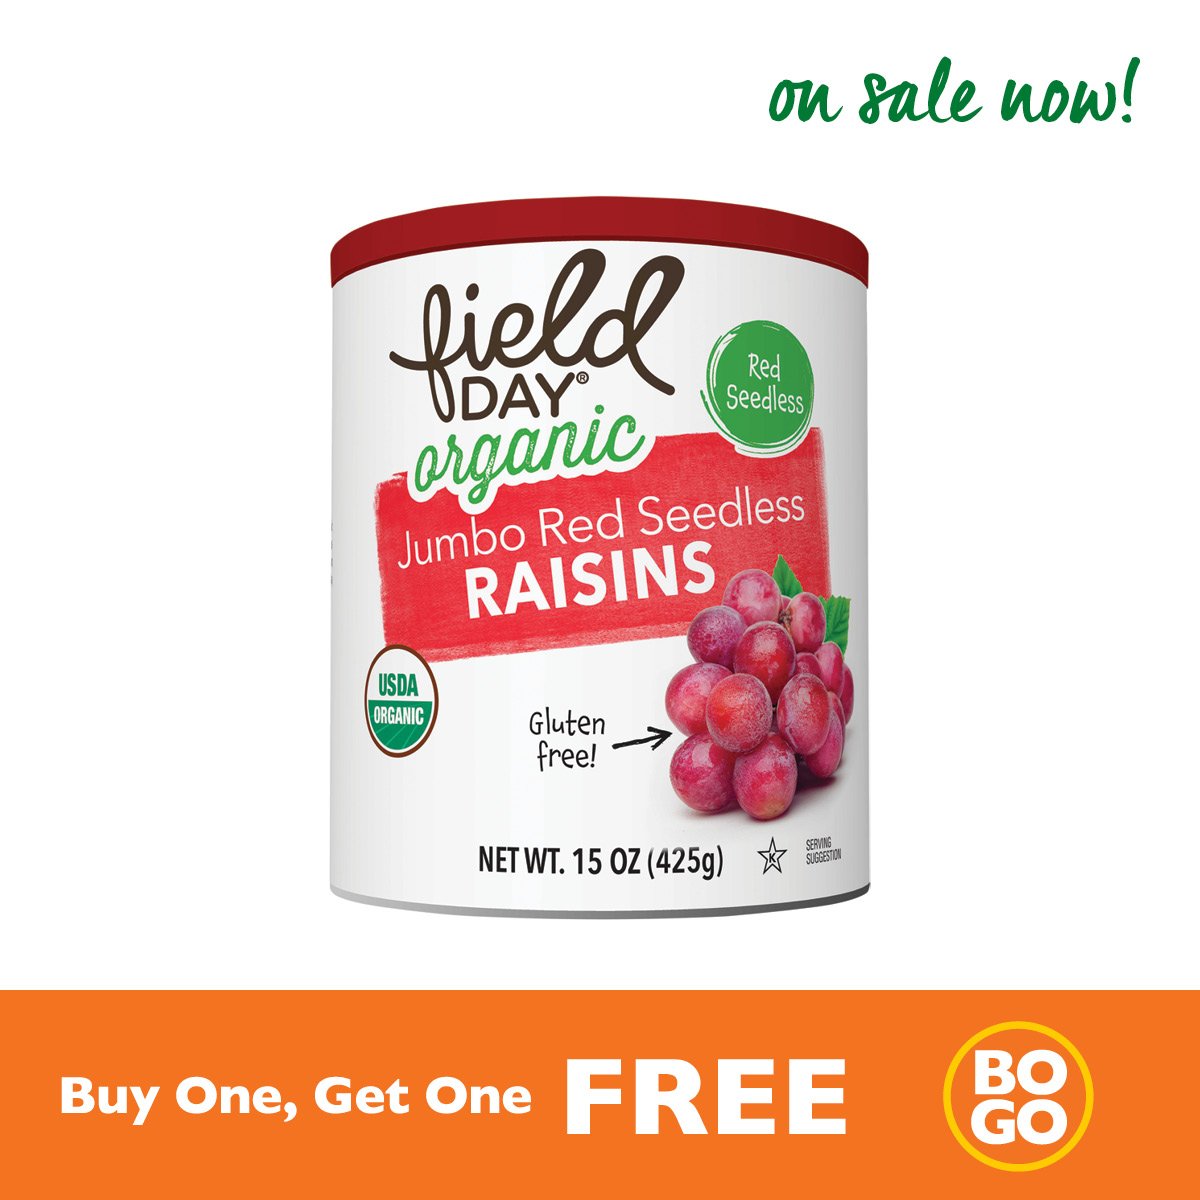 A-5-Field Day-Organic Jumbo Red Seedless Raisins.jpg